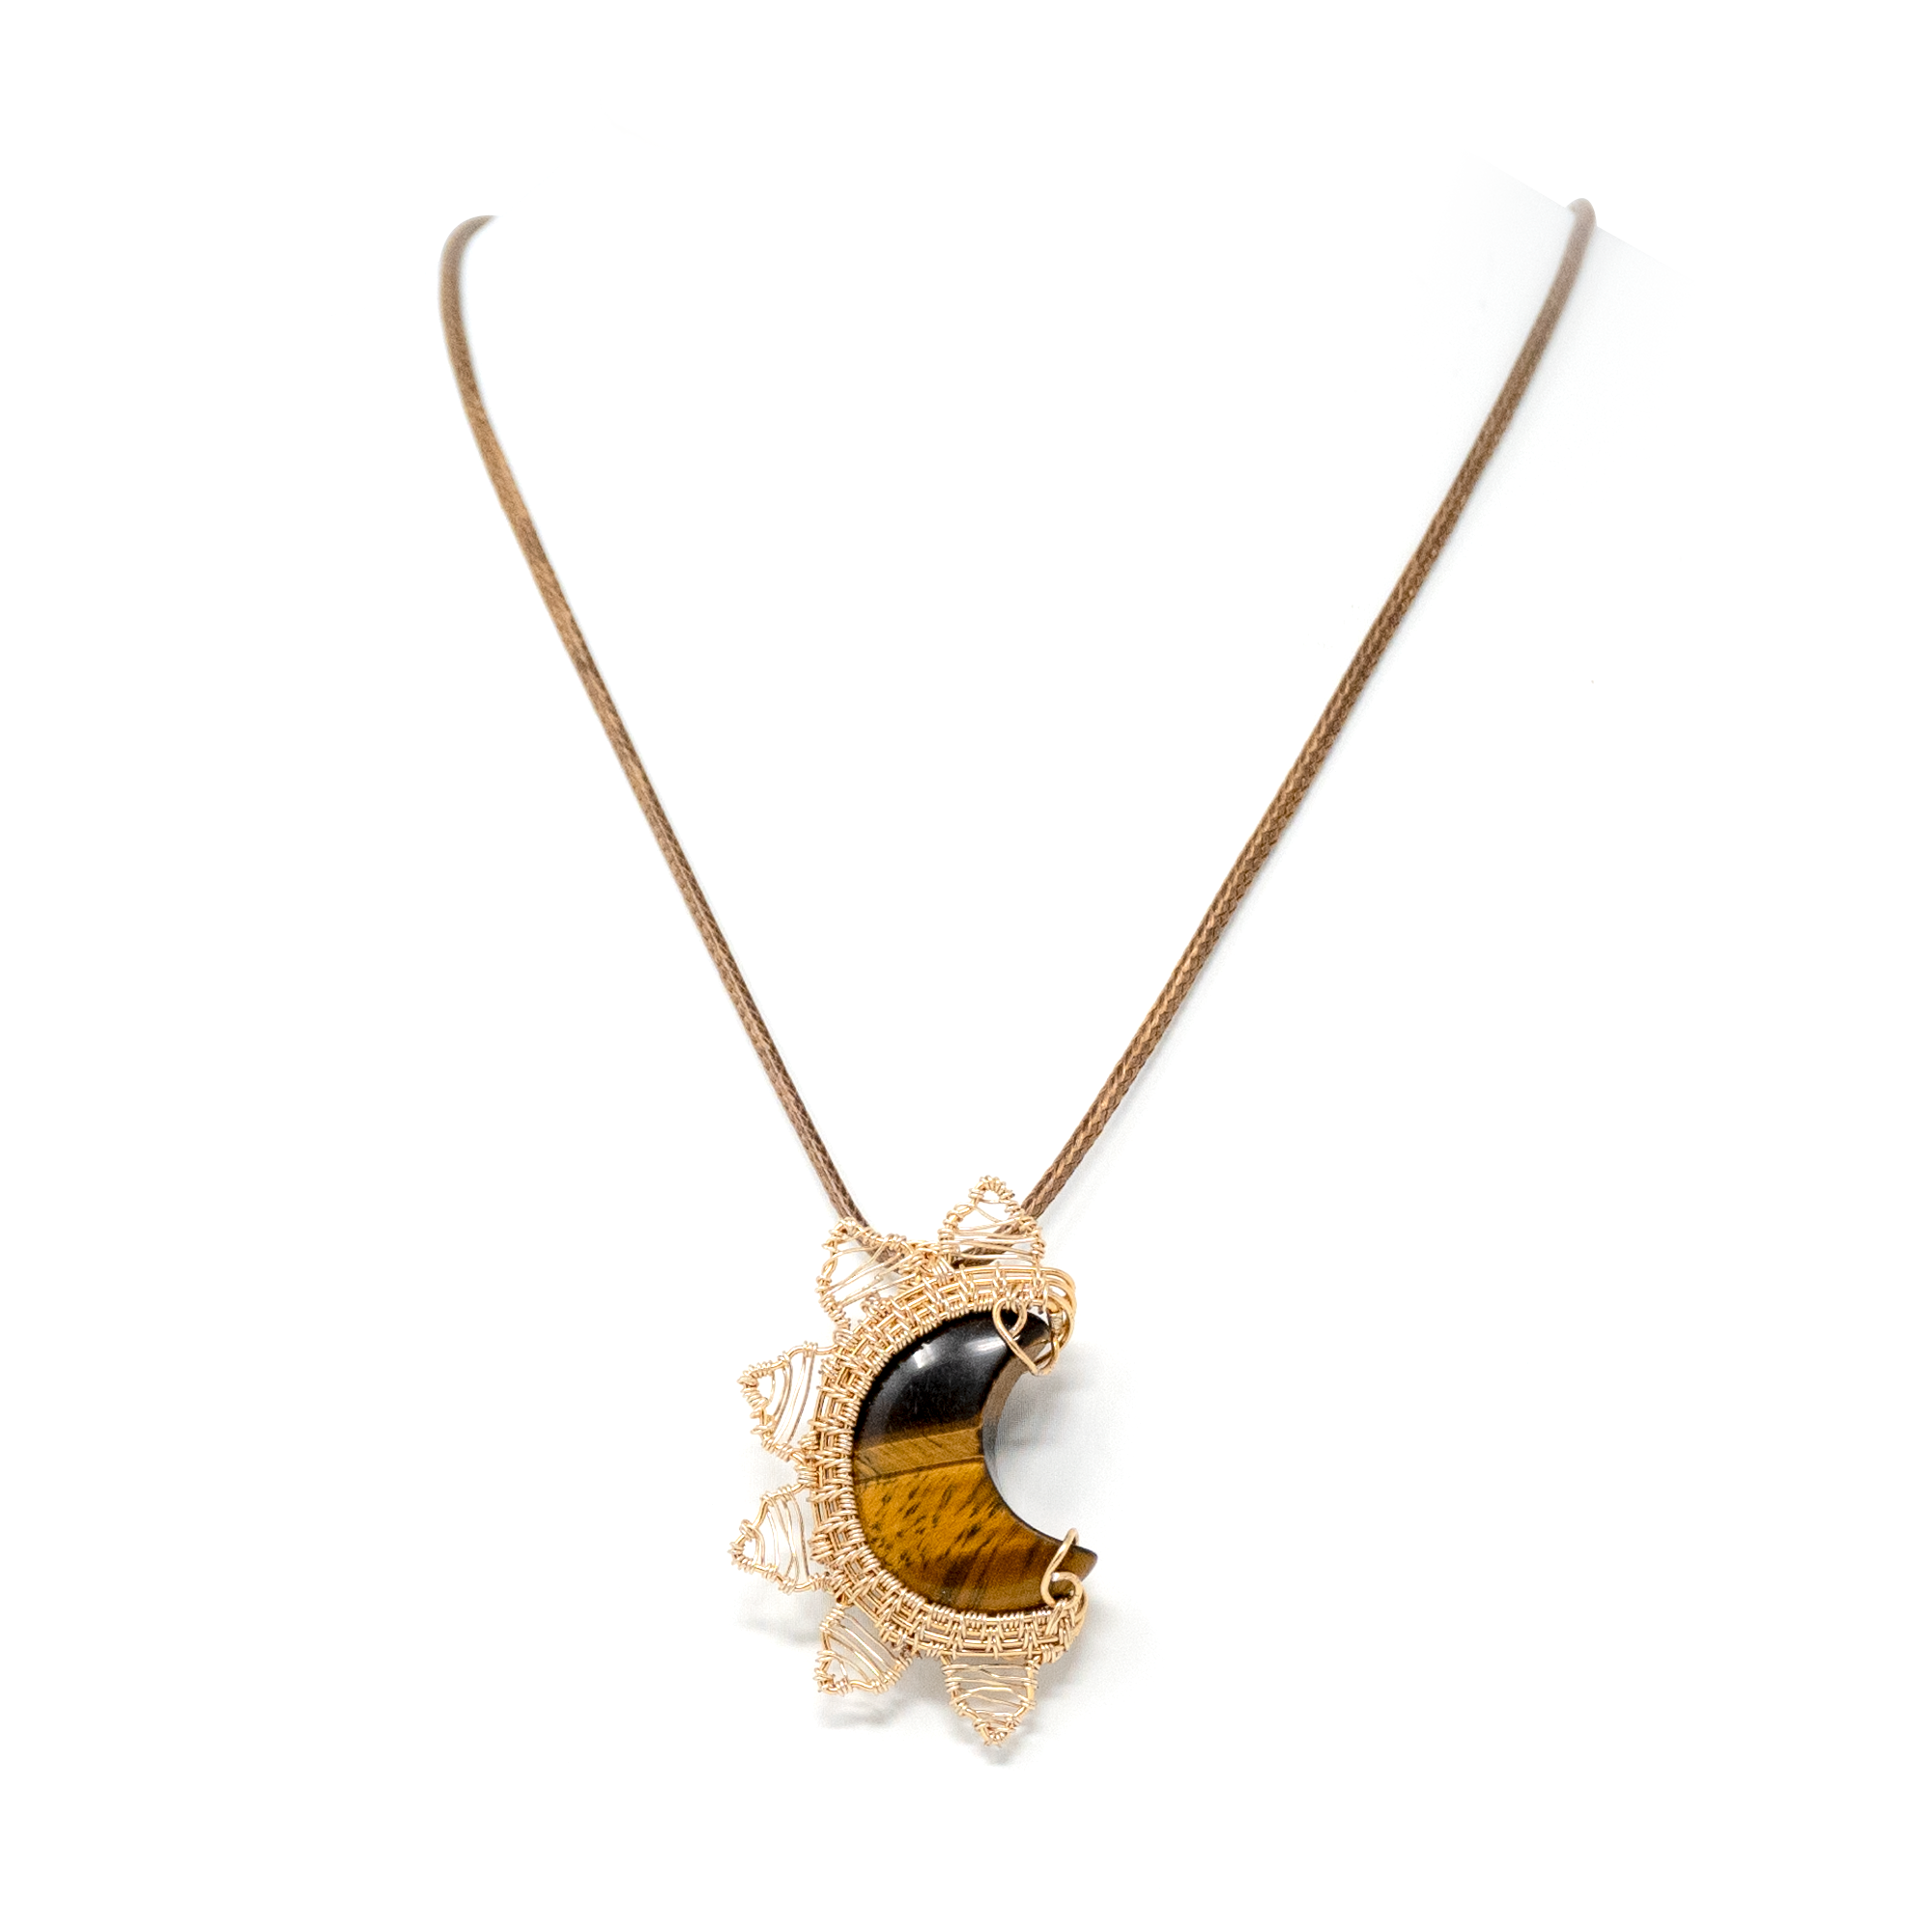 Men’s Tigers Eye Pendant - Gold Pendant Necklace For Men - by Twistedpendant 22 / 18K Gold